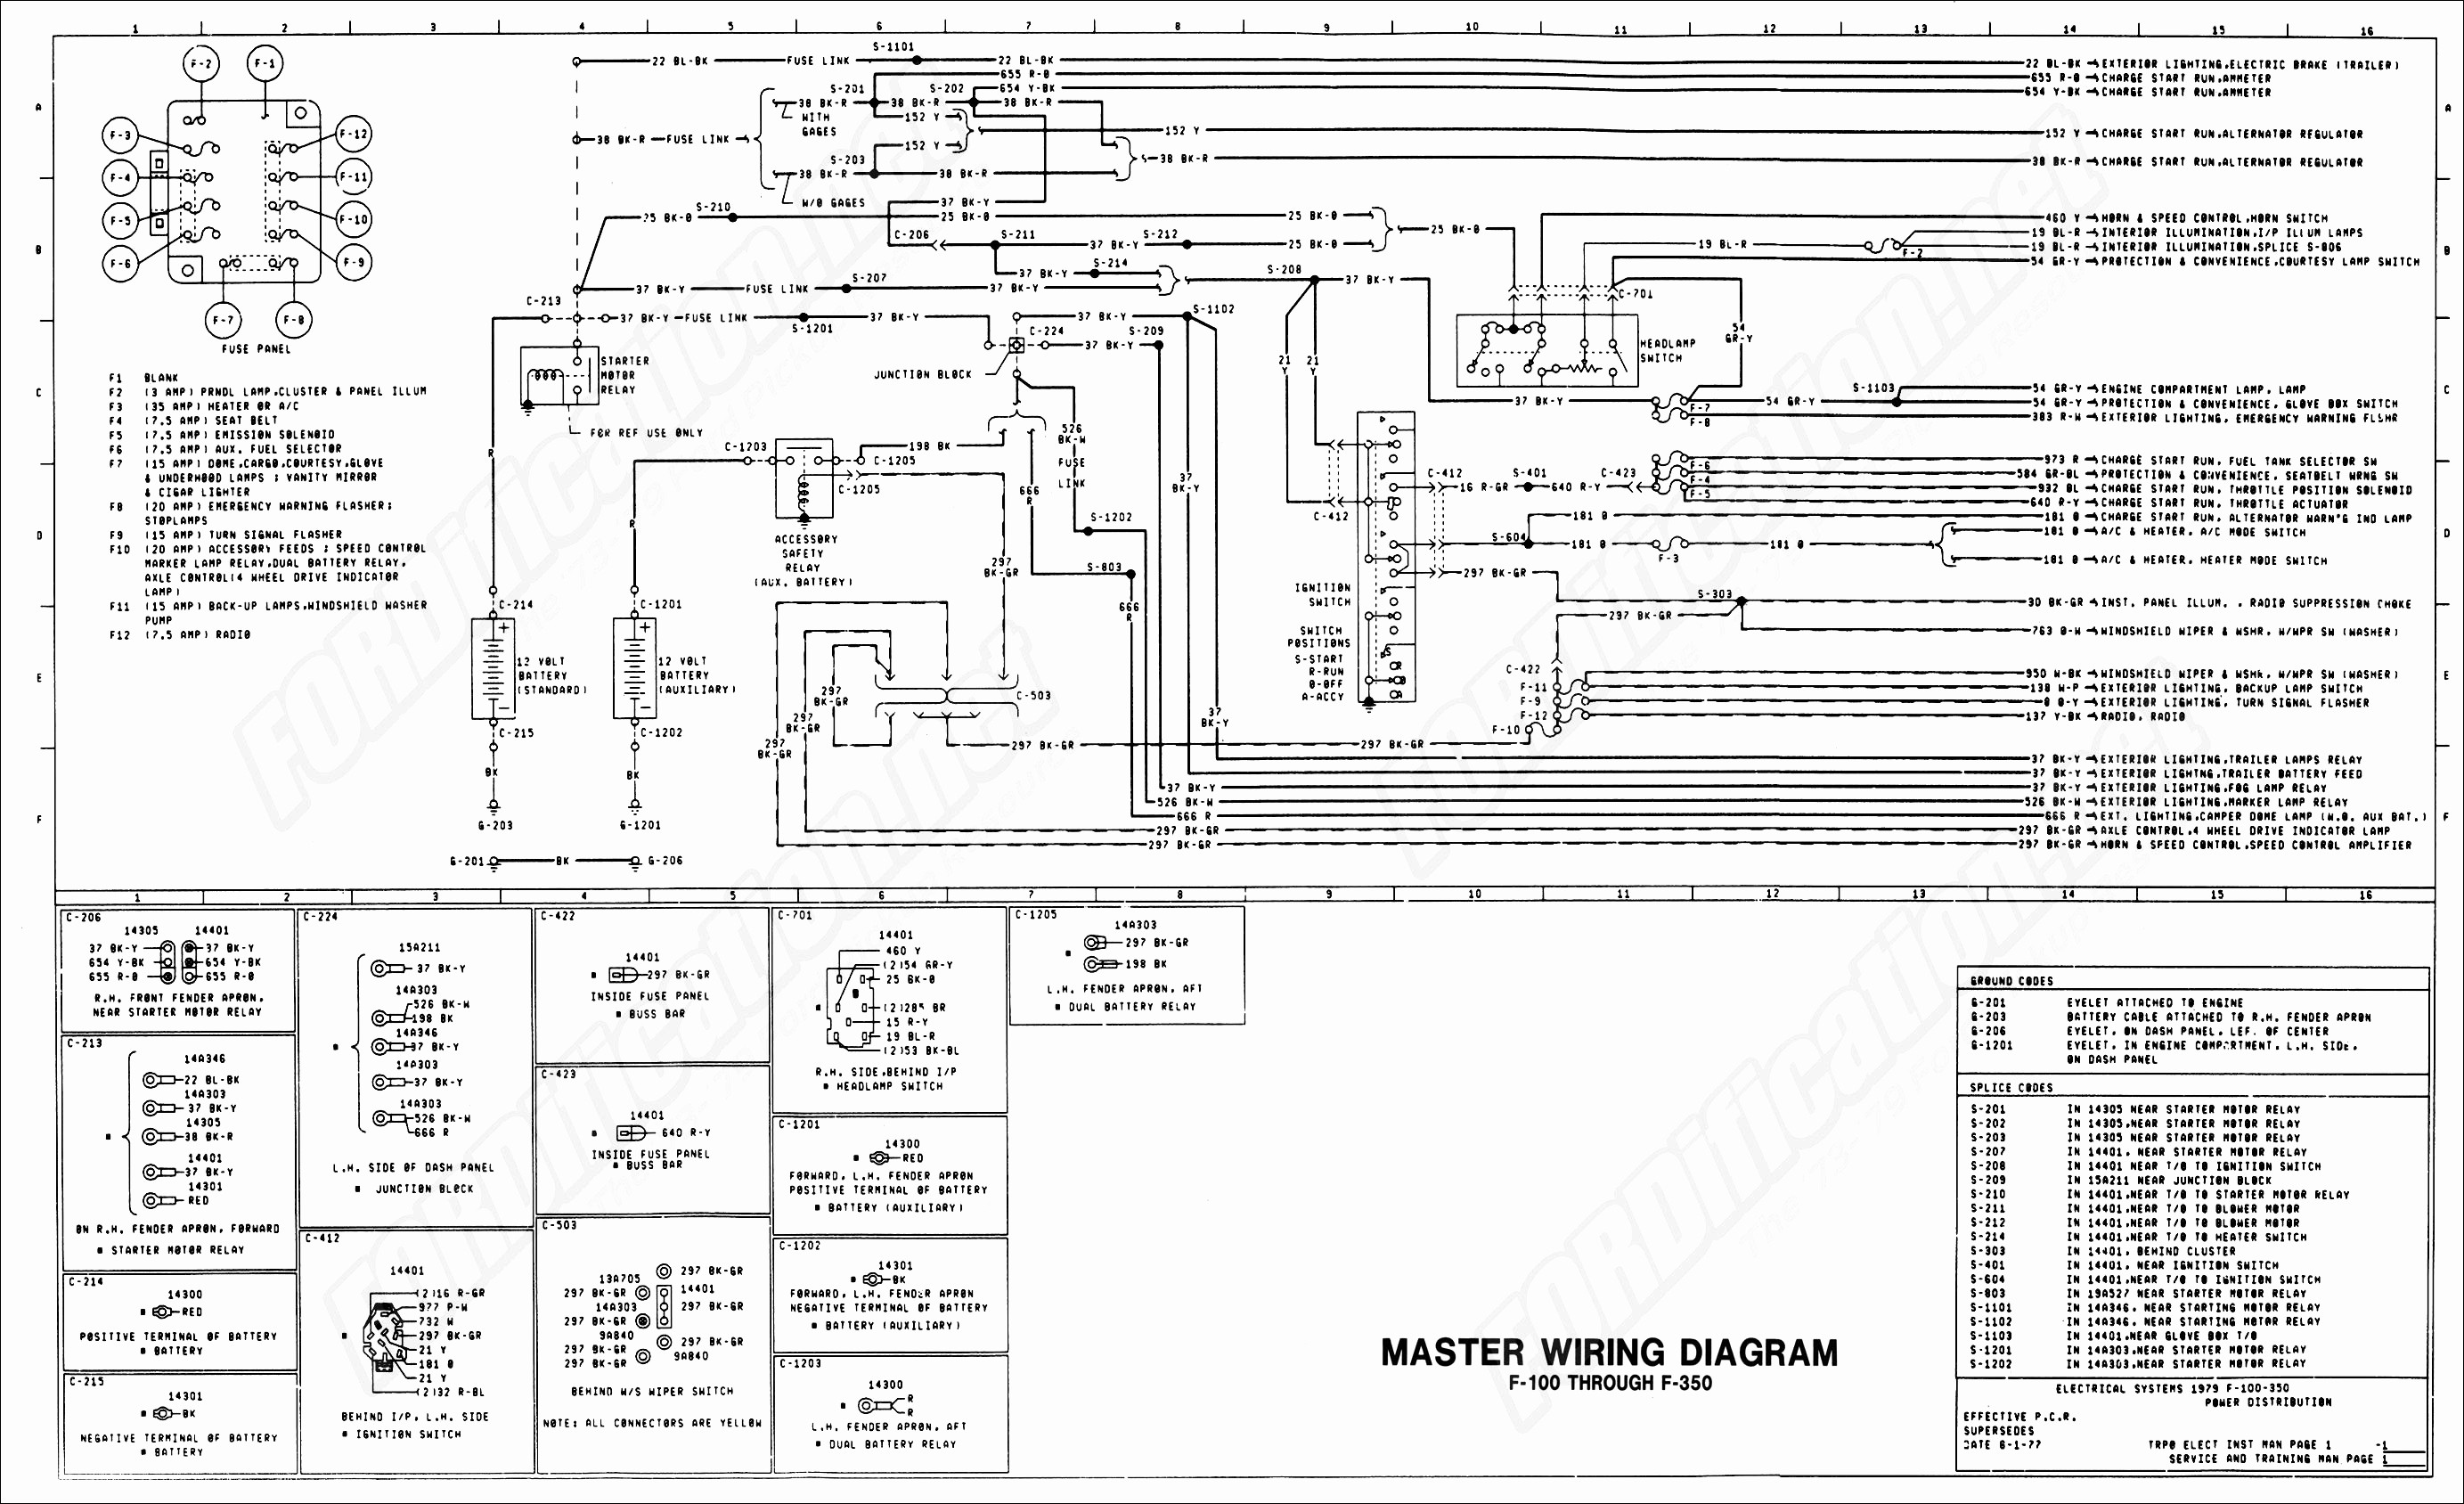 Sony Xplod Wiring Diagram Luxury Wiring Diagram for Car Radios New sony Xplod 52wx4 Wiring Diagram